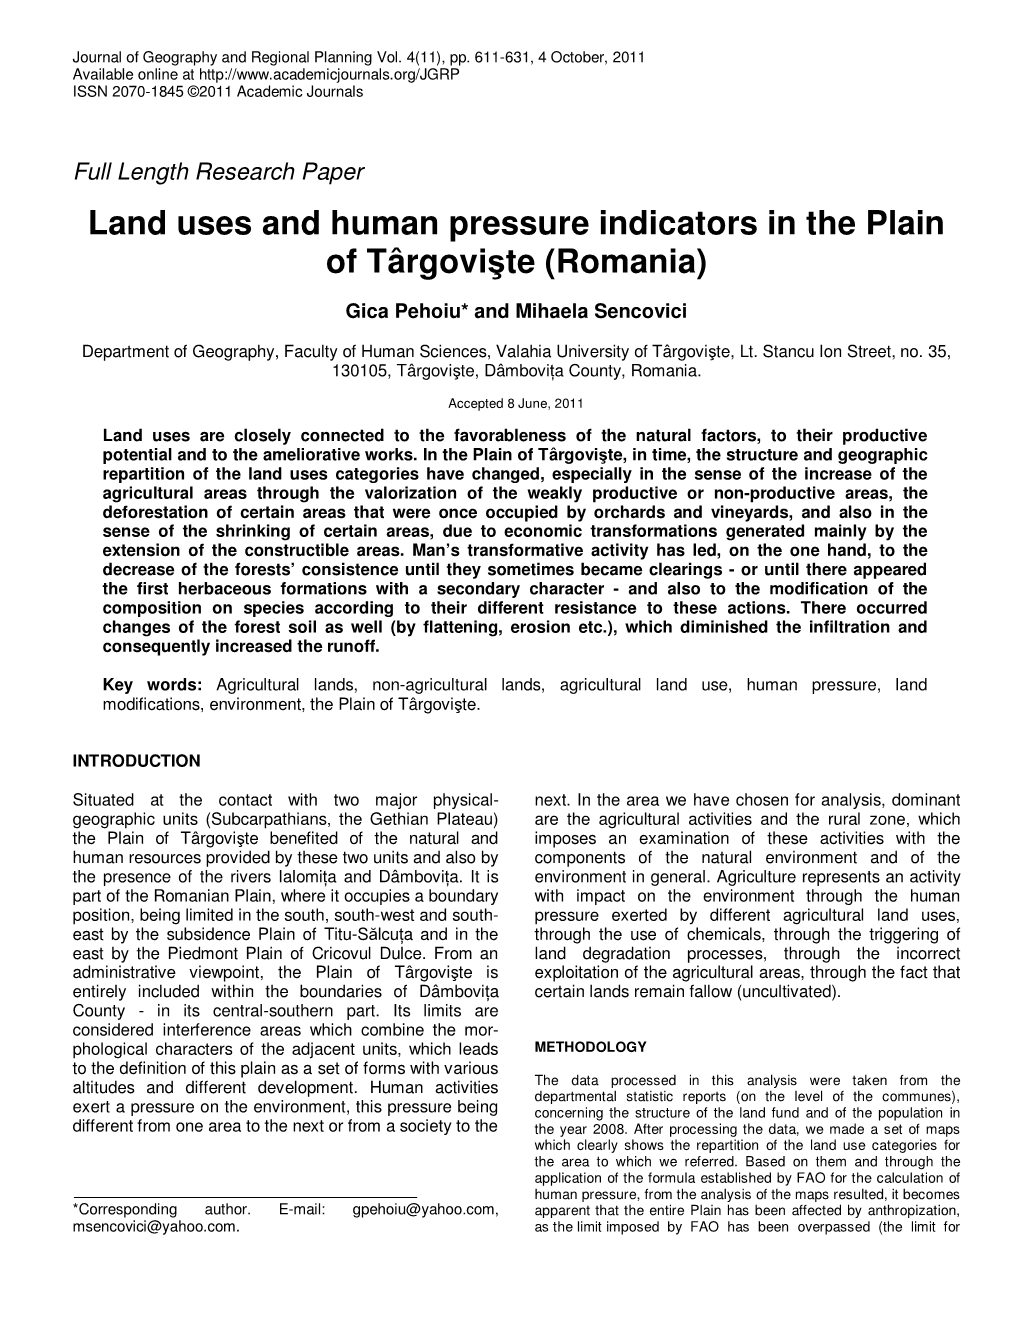 Land Uses and Human Pressure Indicators in the Plain of Târgovişte